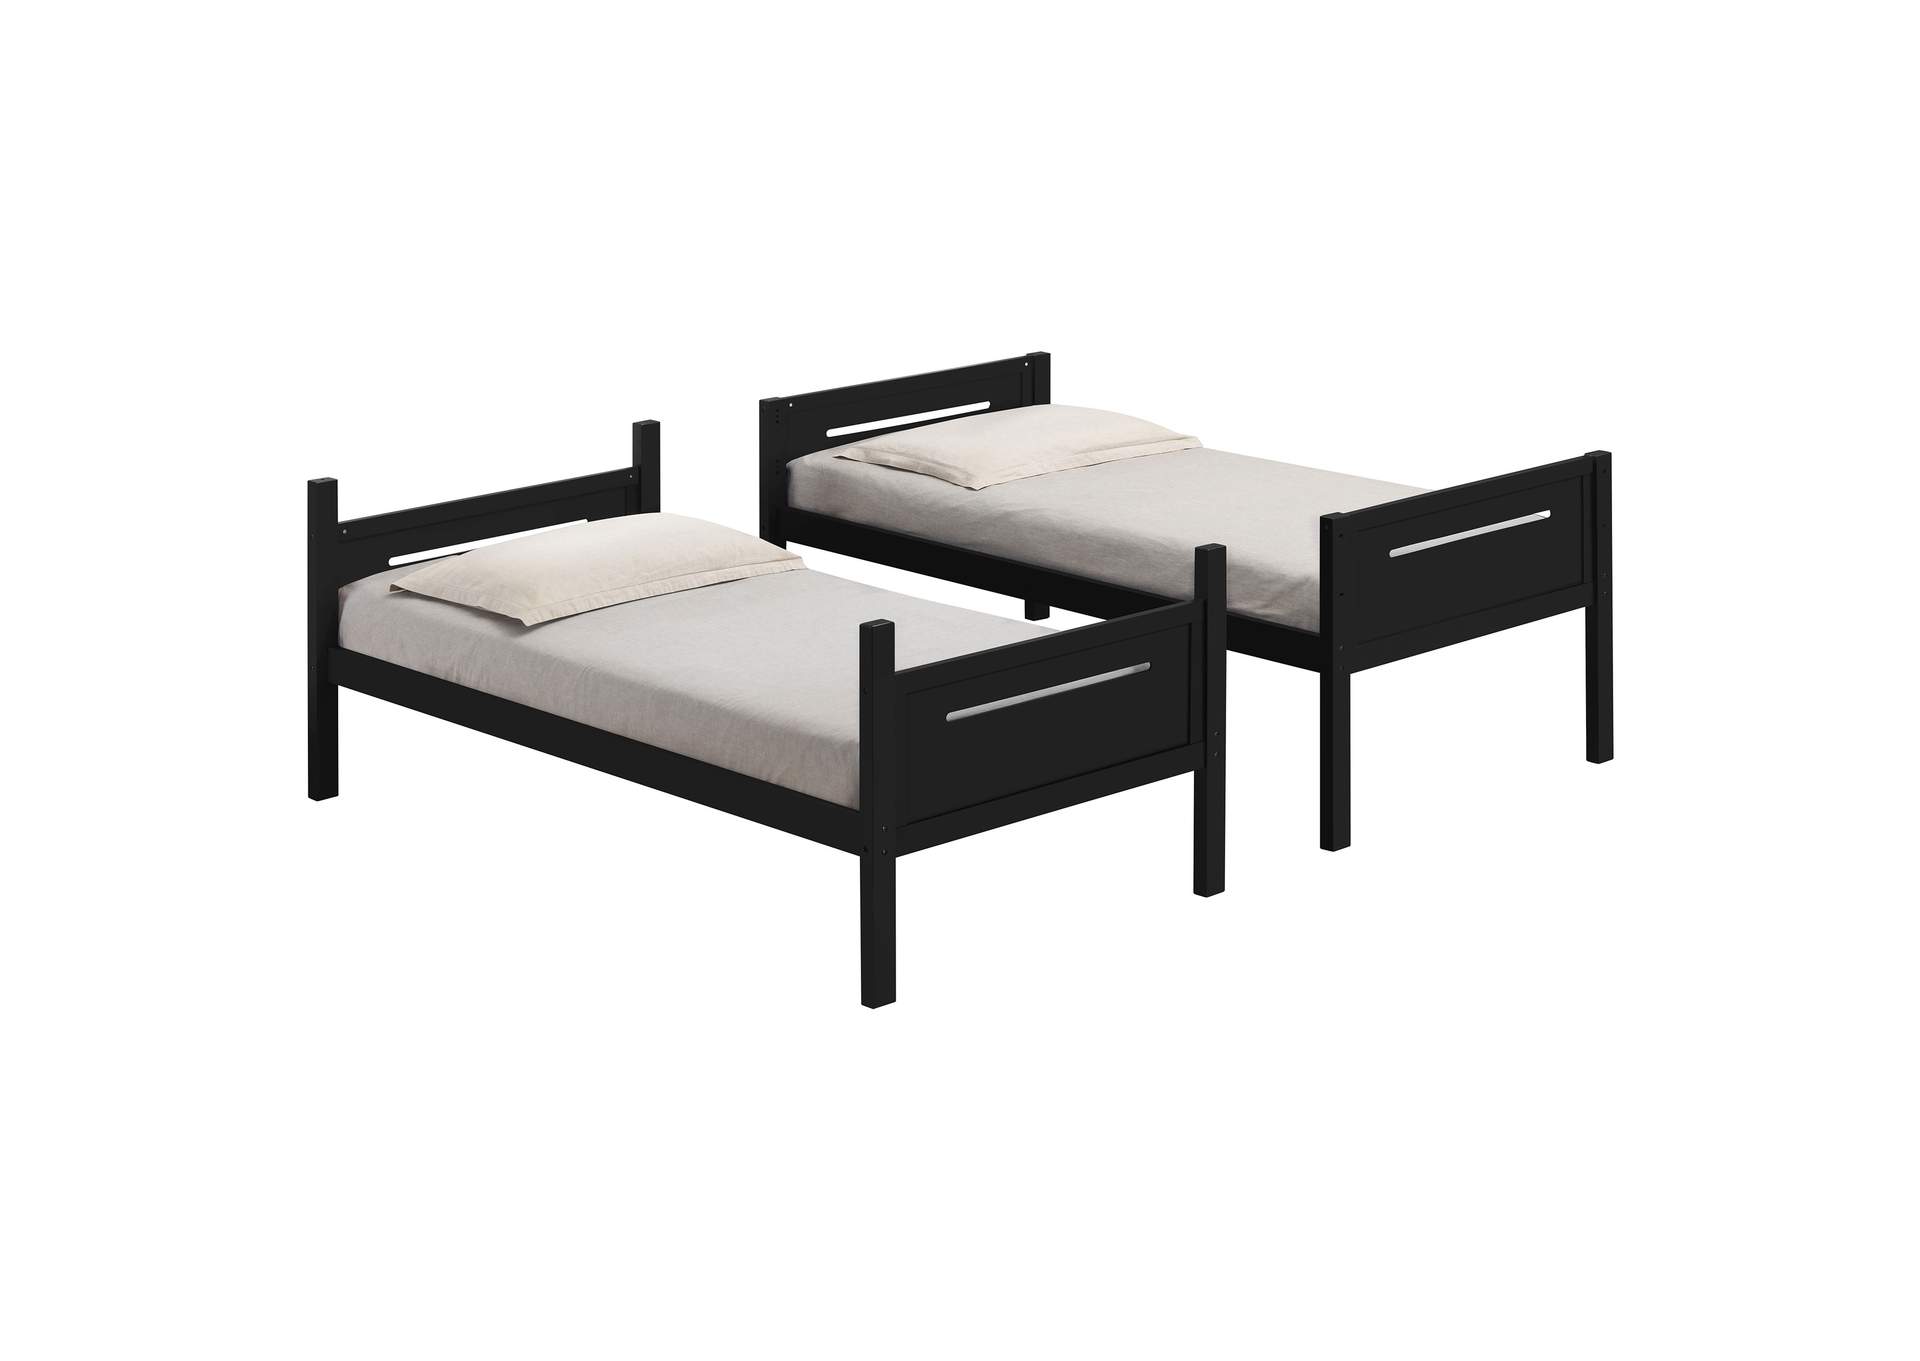 Littleton Littleton Twin/Twin Bunk Bed Black,Coaster Furniture